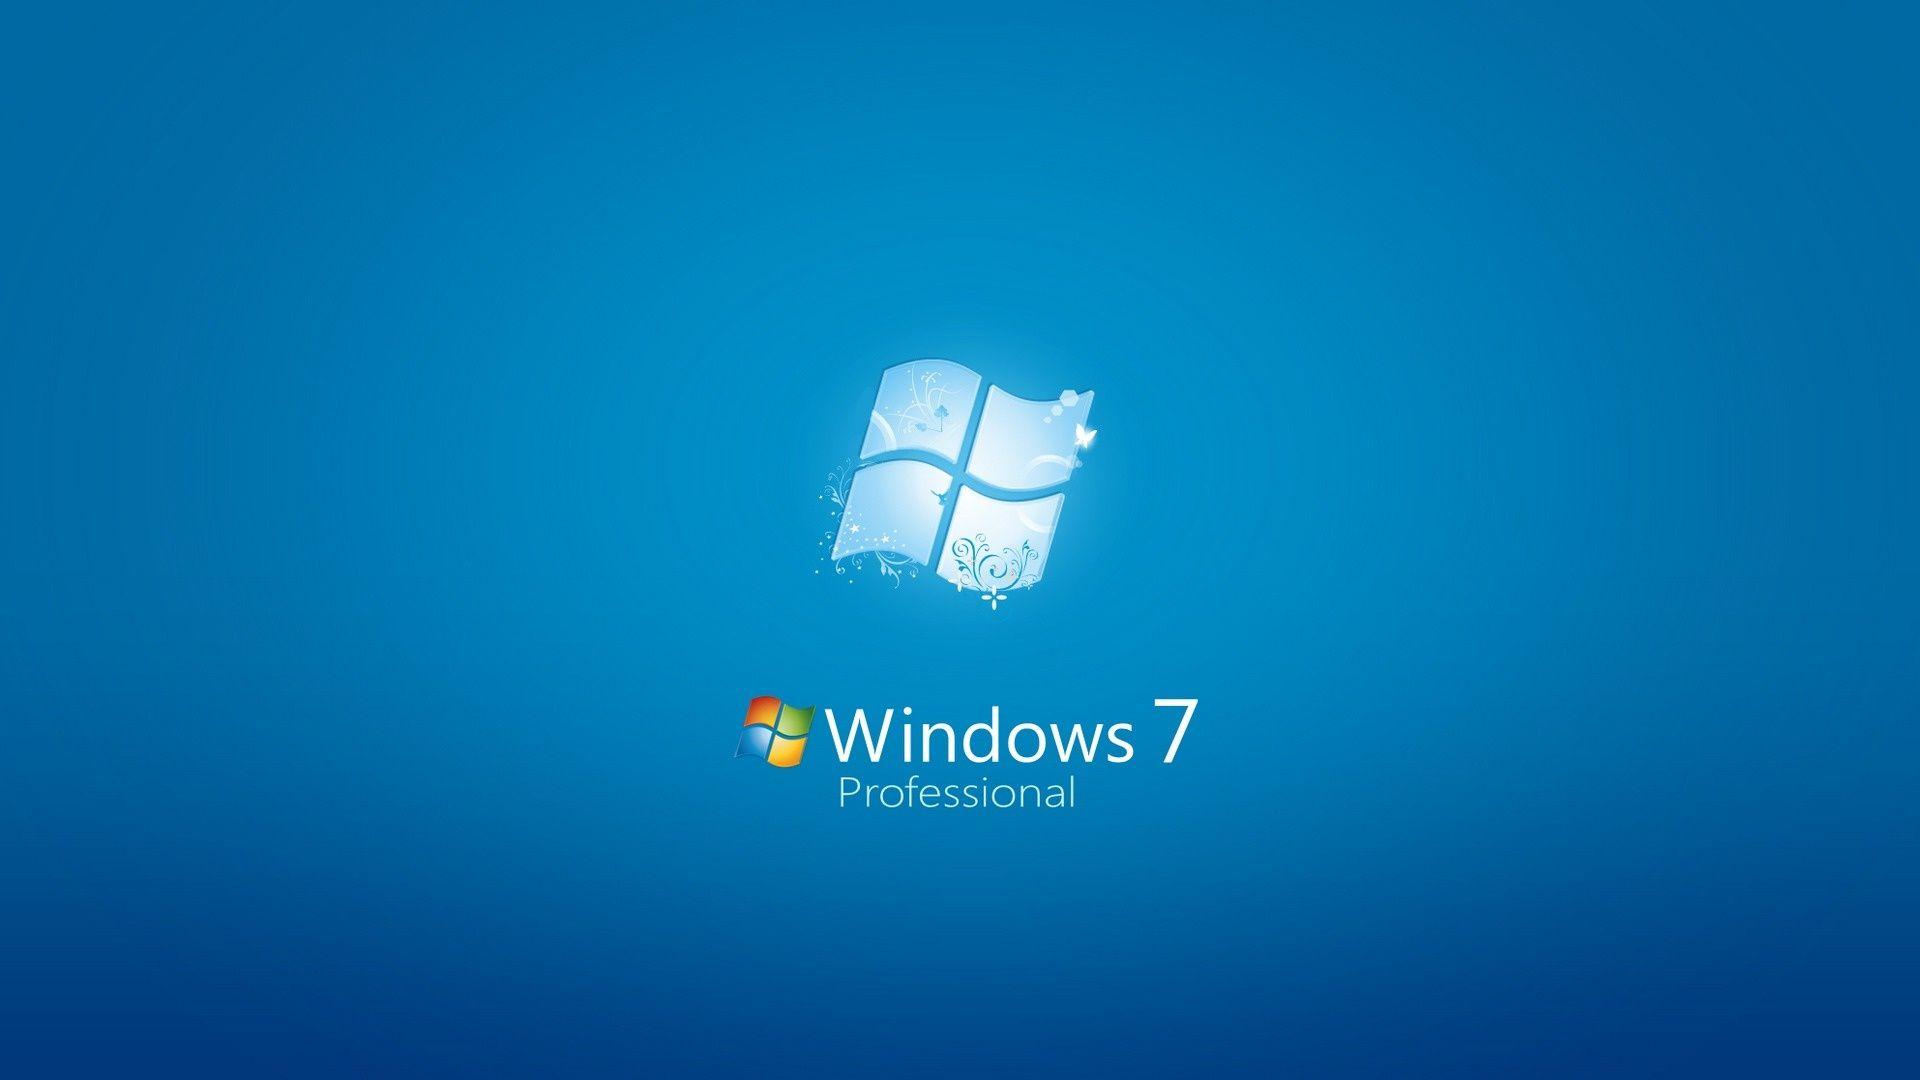 Technology Windows 7 wallpaper (Desktop, Phone, Tablet)